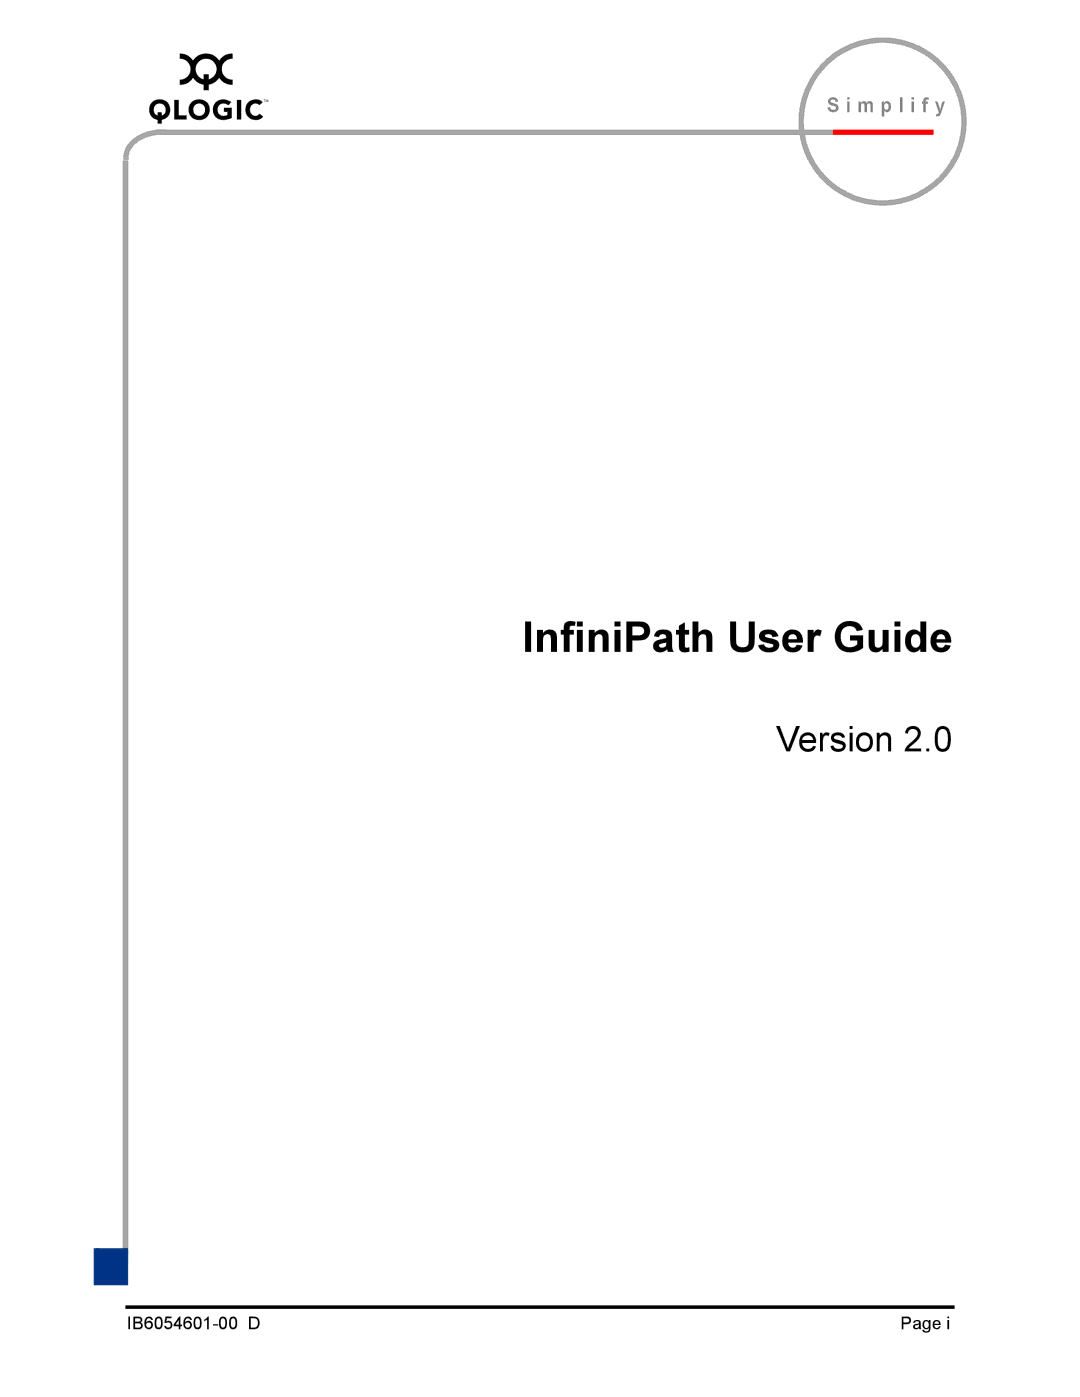 Q-Logic IB6054601-00 D manual InfiniPath User Guide 